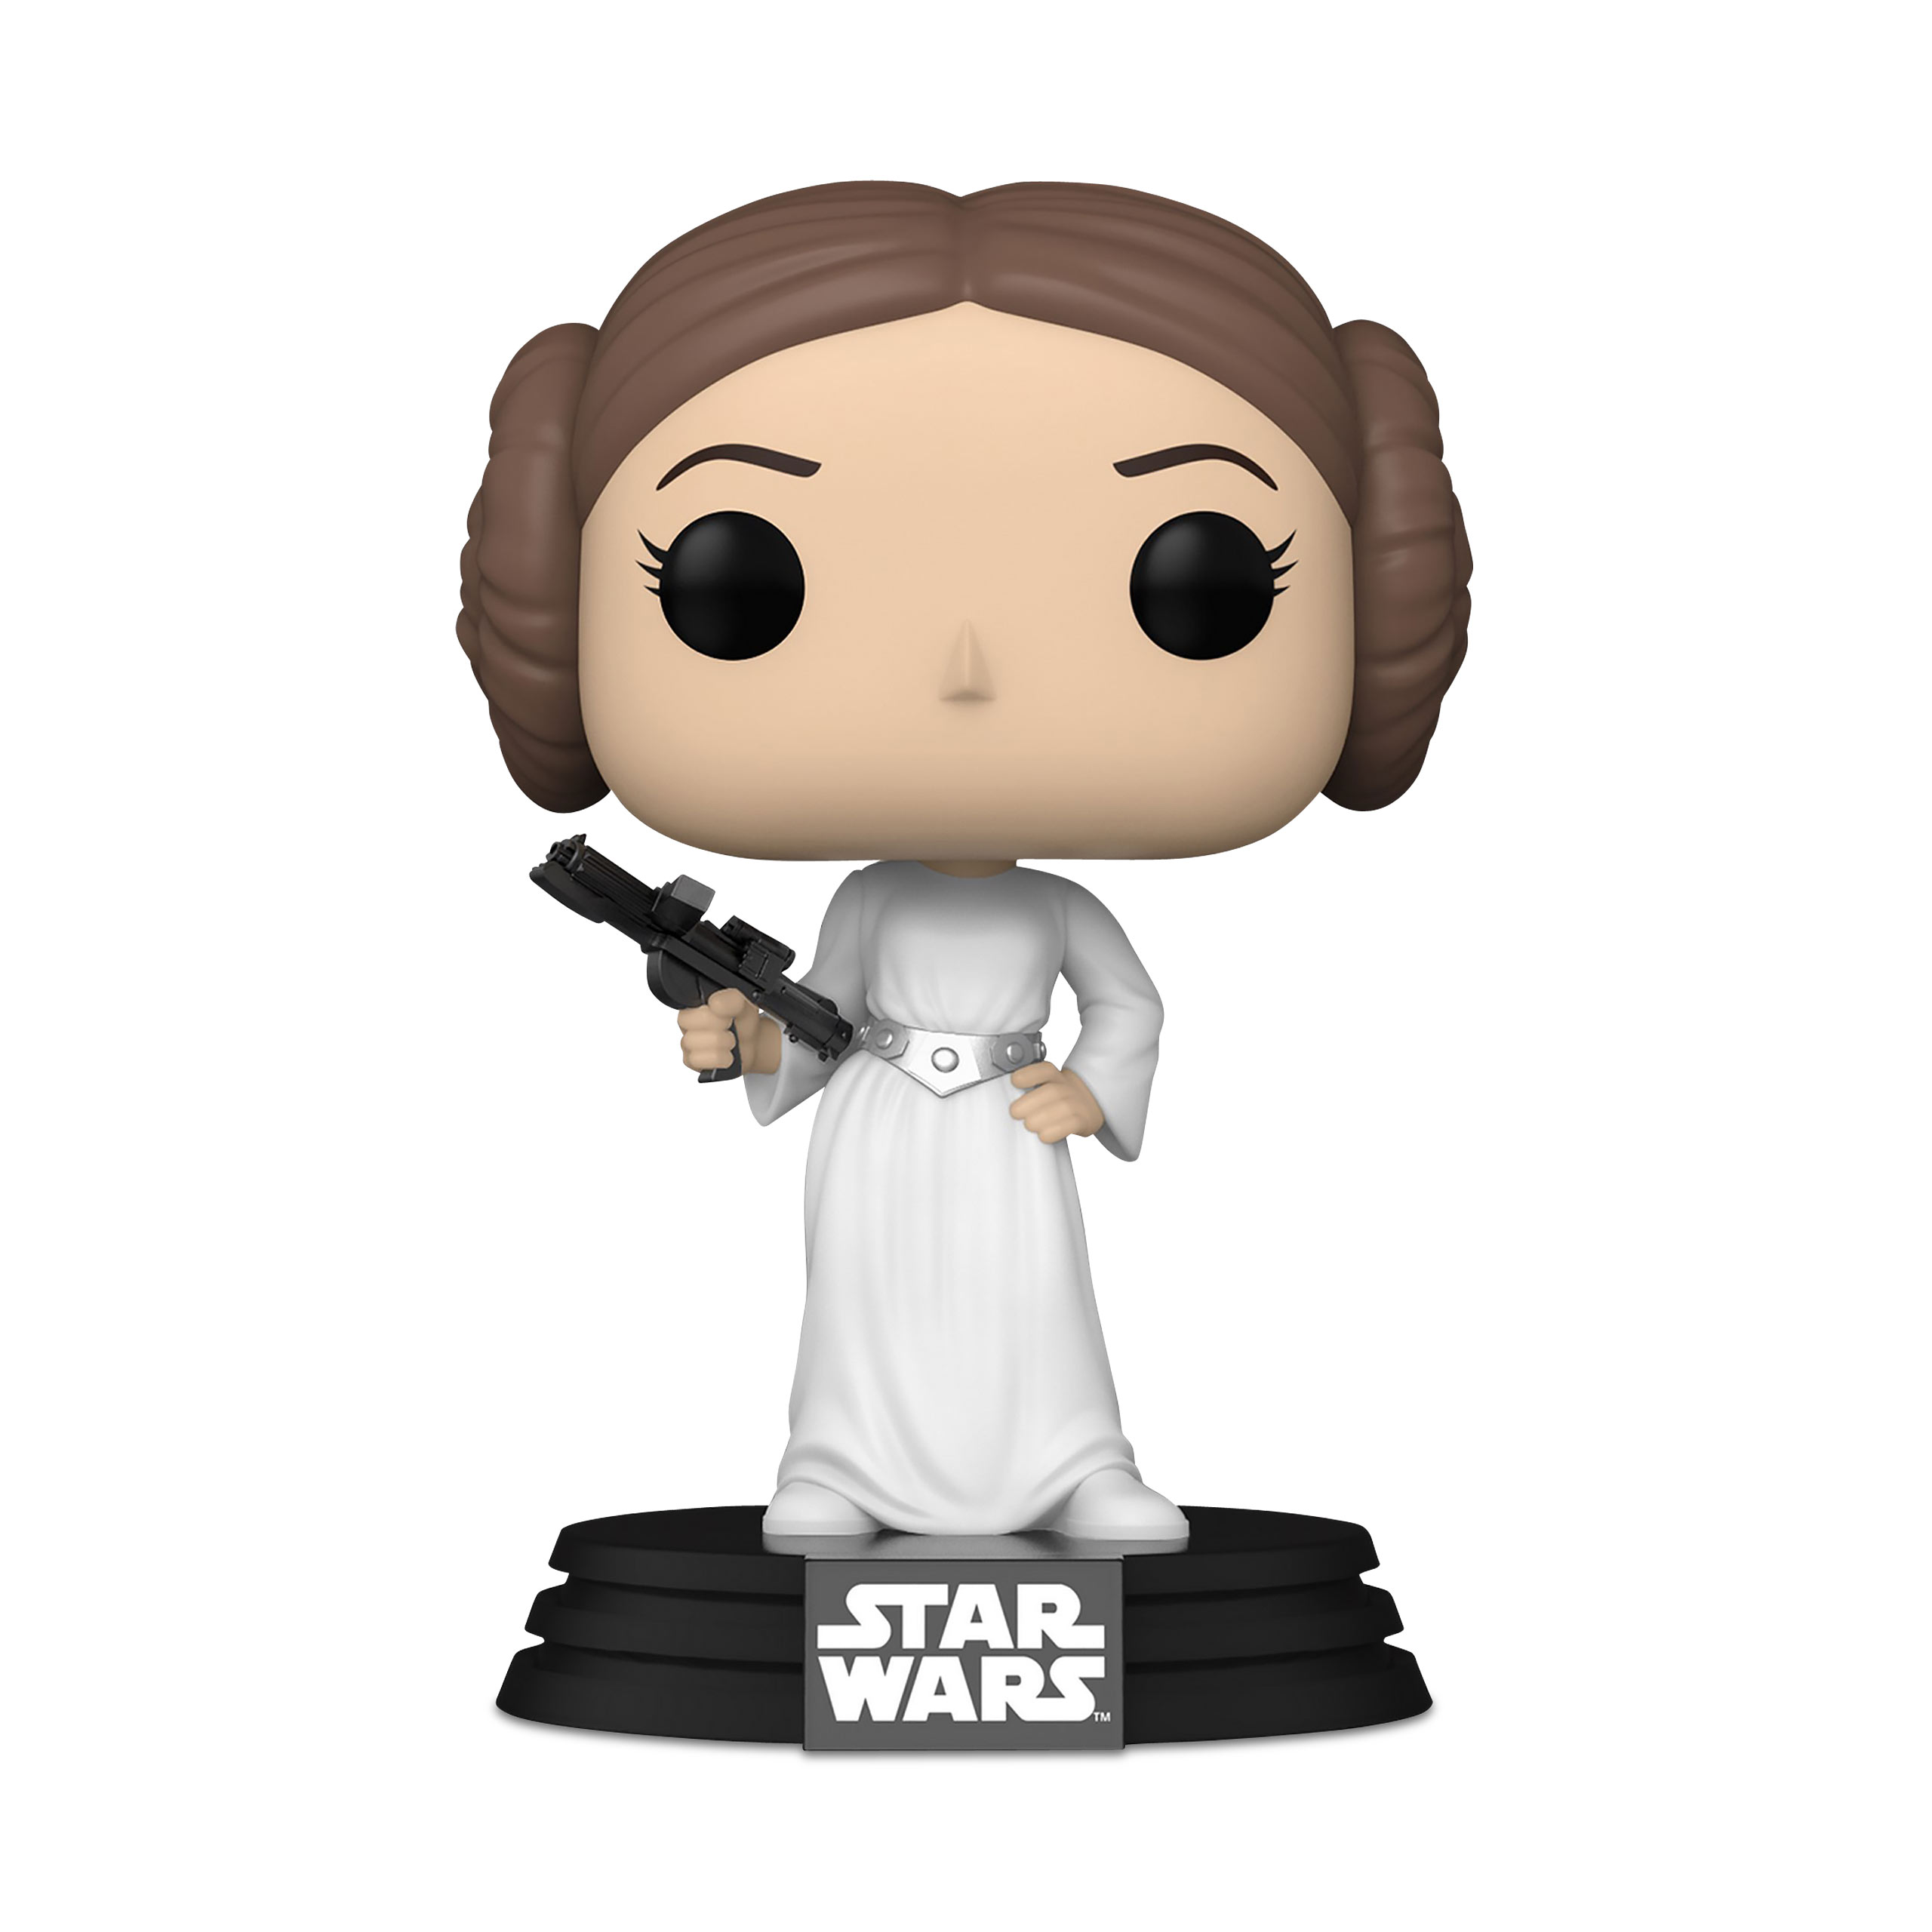 Star Wars - Princess Leia Funko Pop Bobblehead Figure